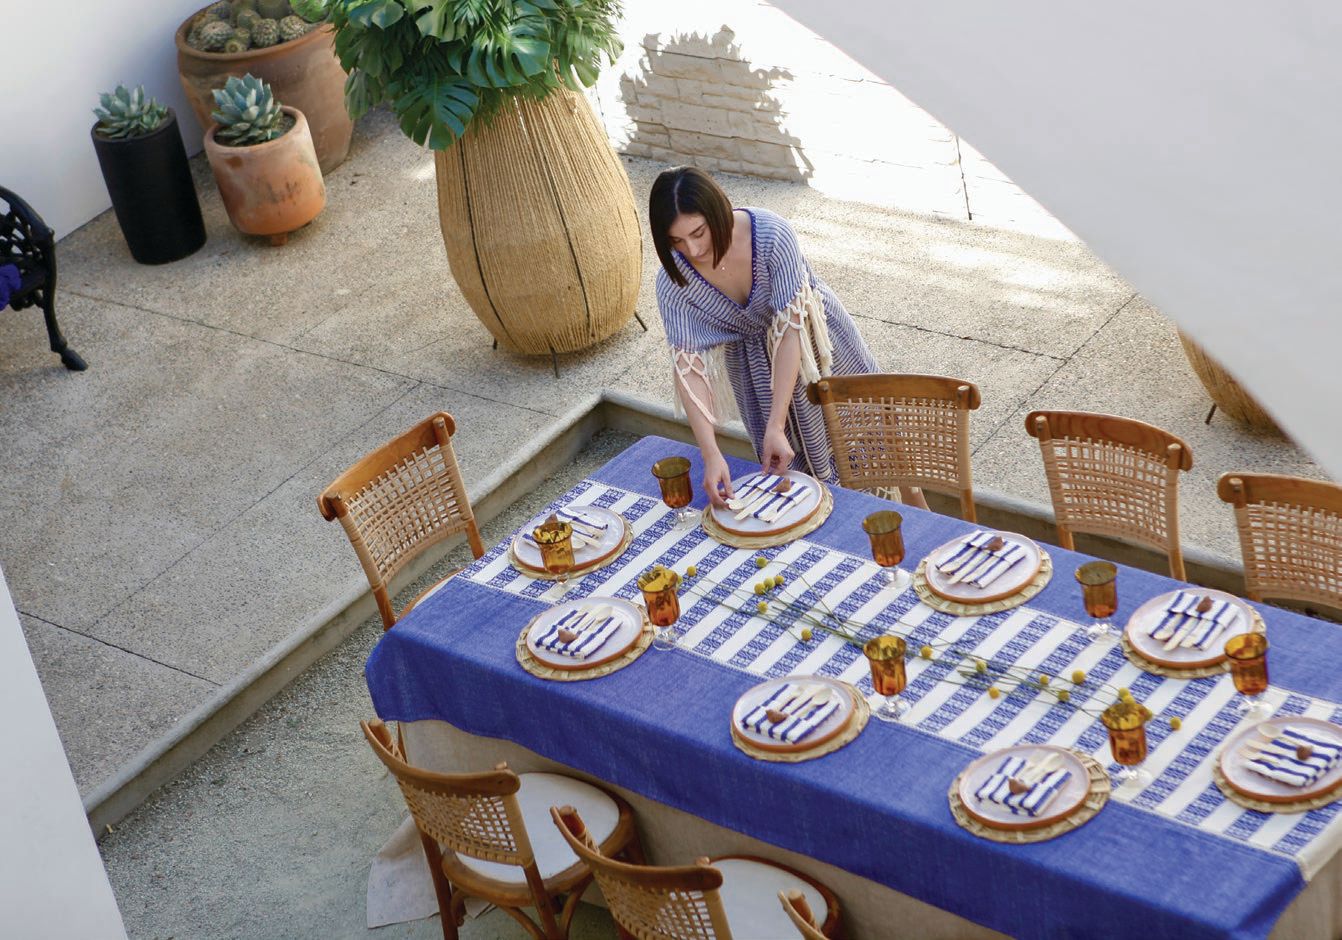 Santorini handwoven tablecloth, all at jalineresort.com  PHOTO COURTESY OF BRAND